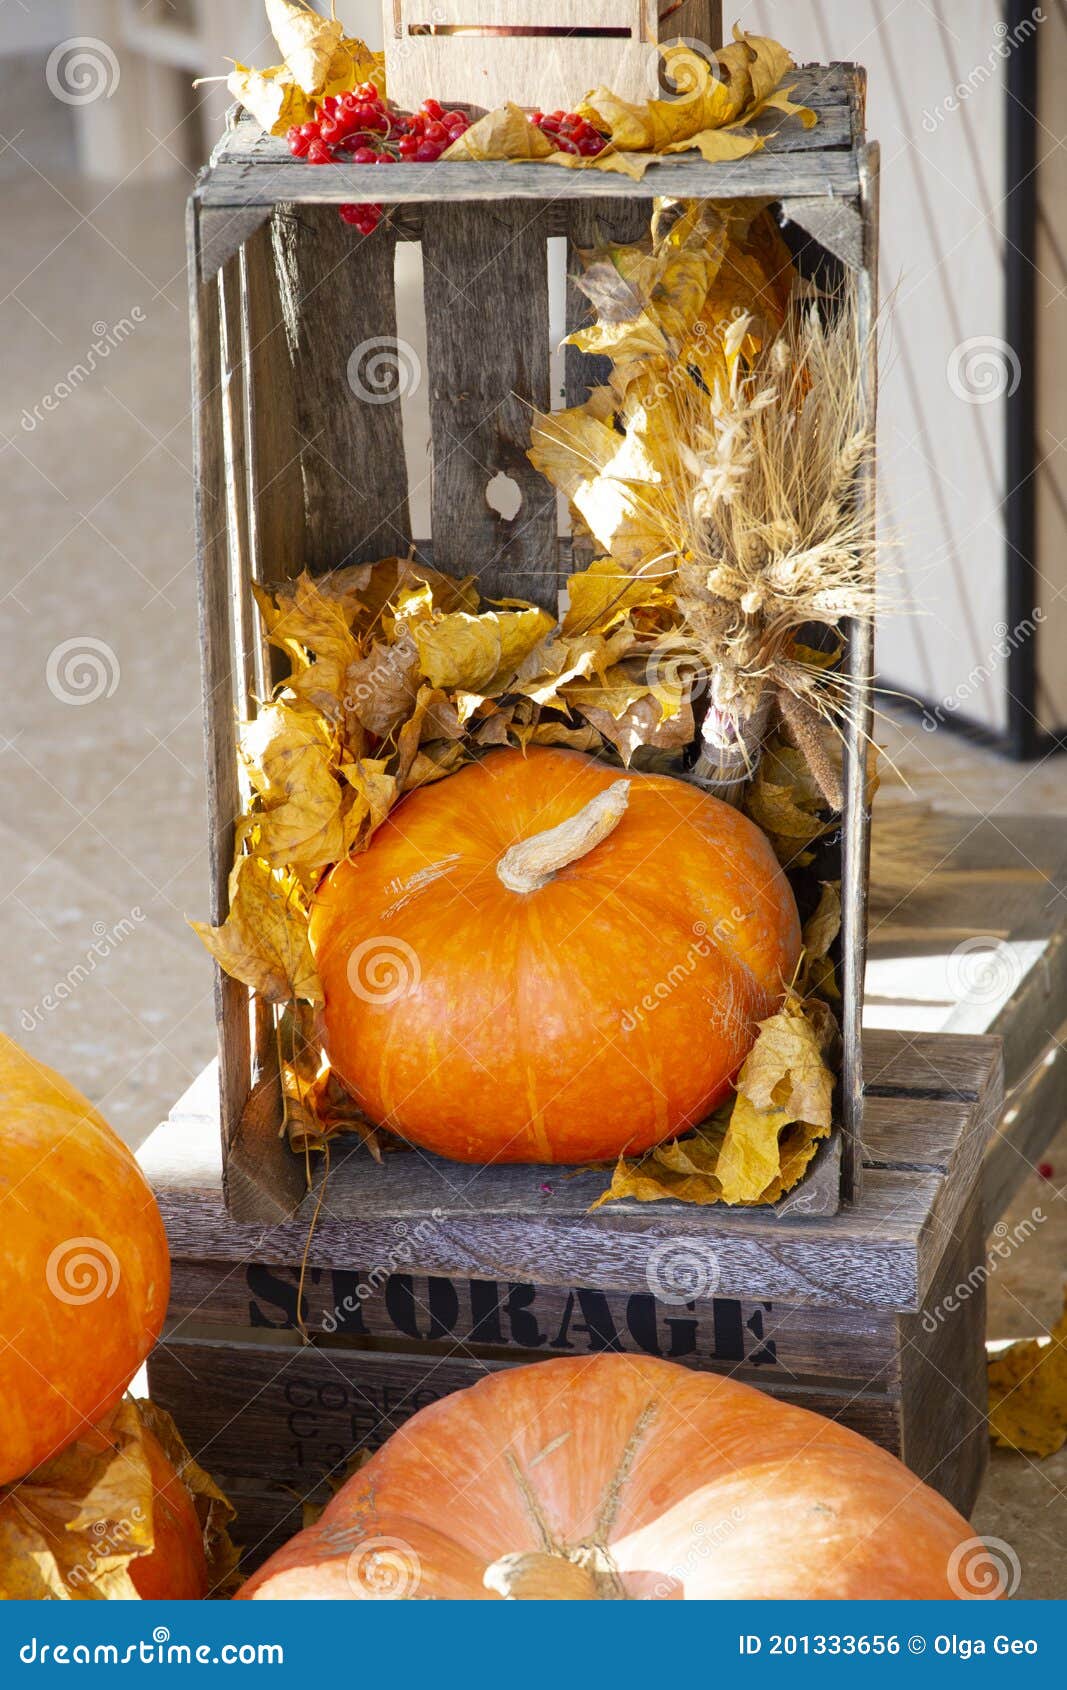 a large bright ripe pumpkin jackolantern vertical